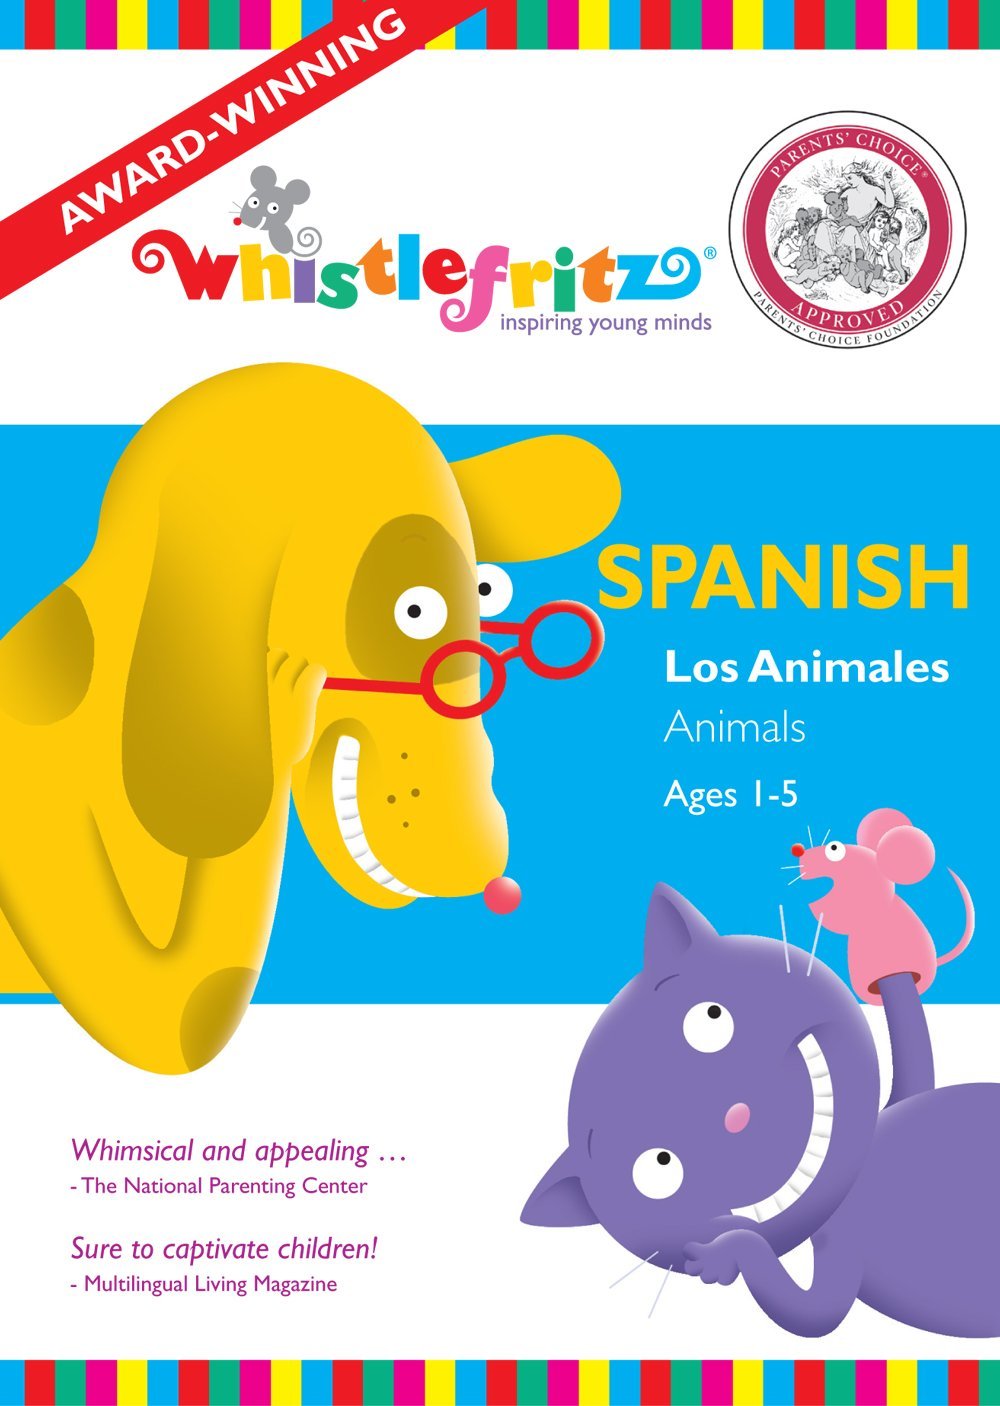 los animales learn spanish